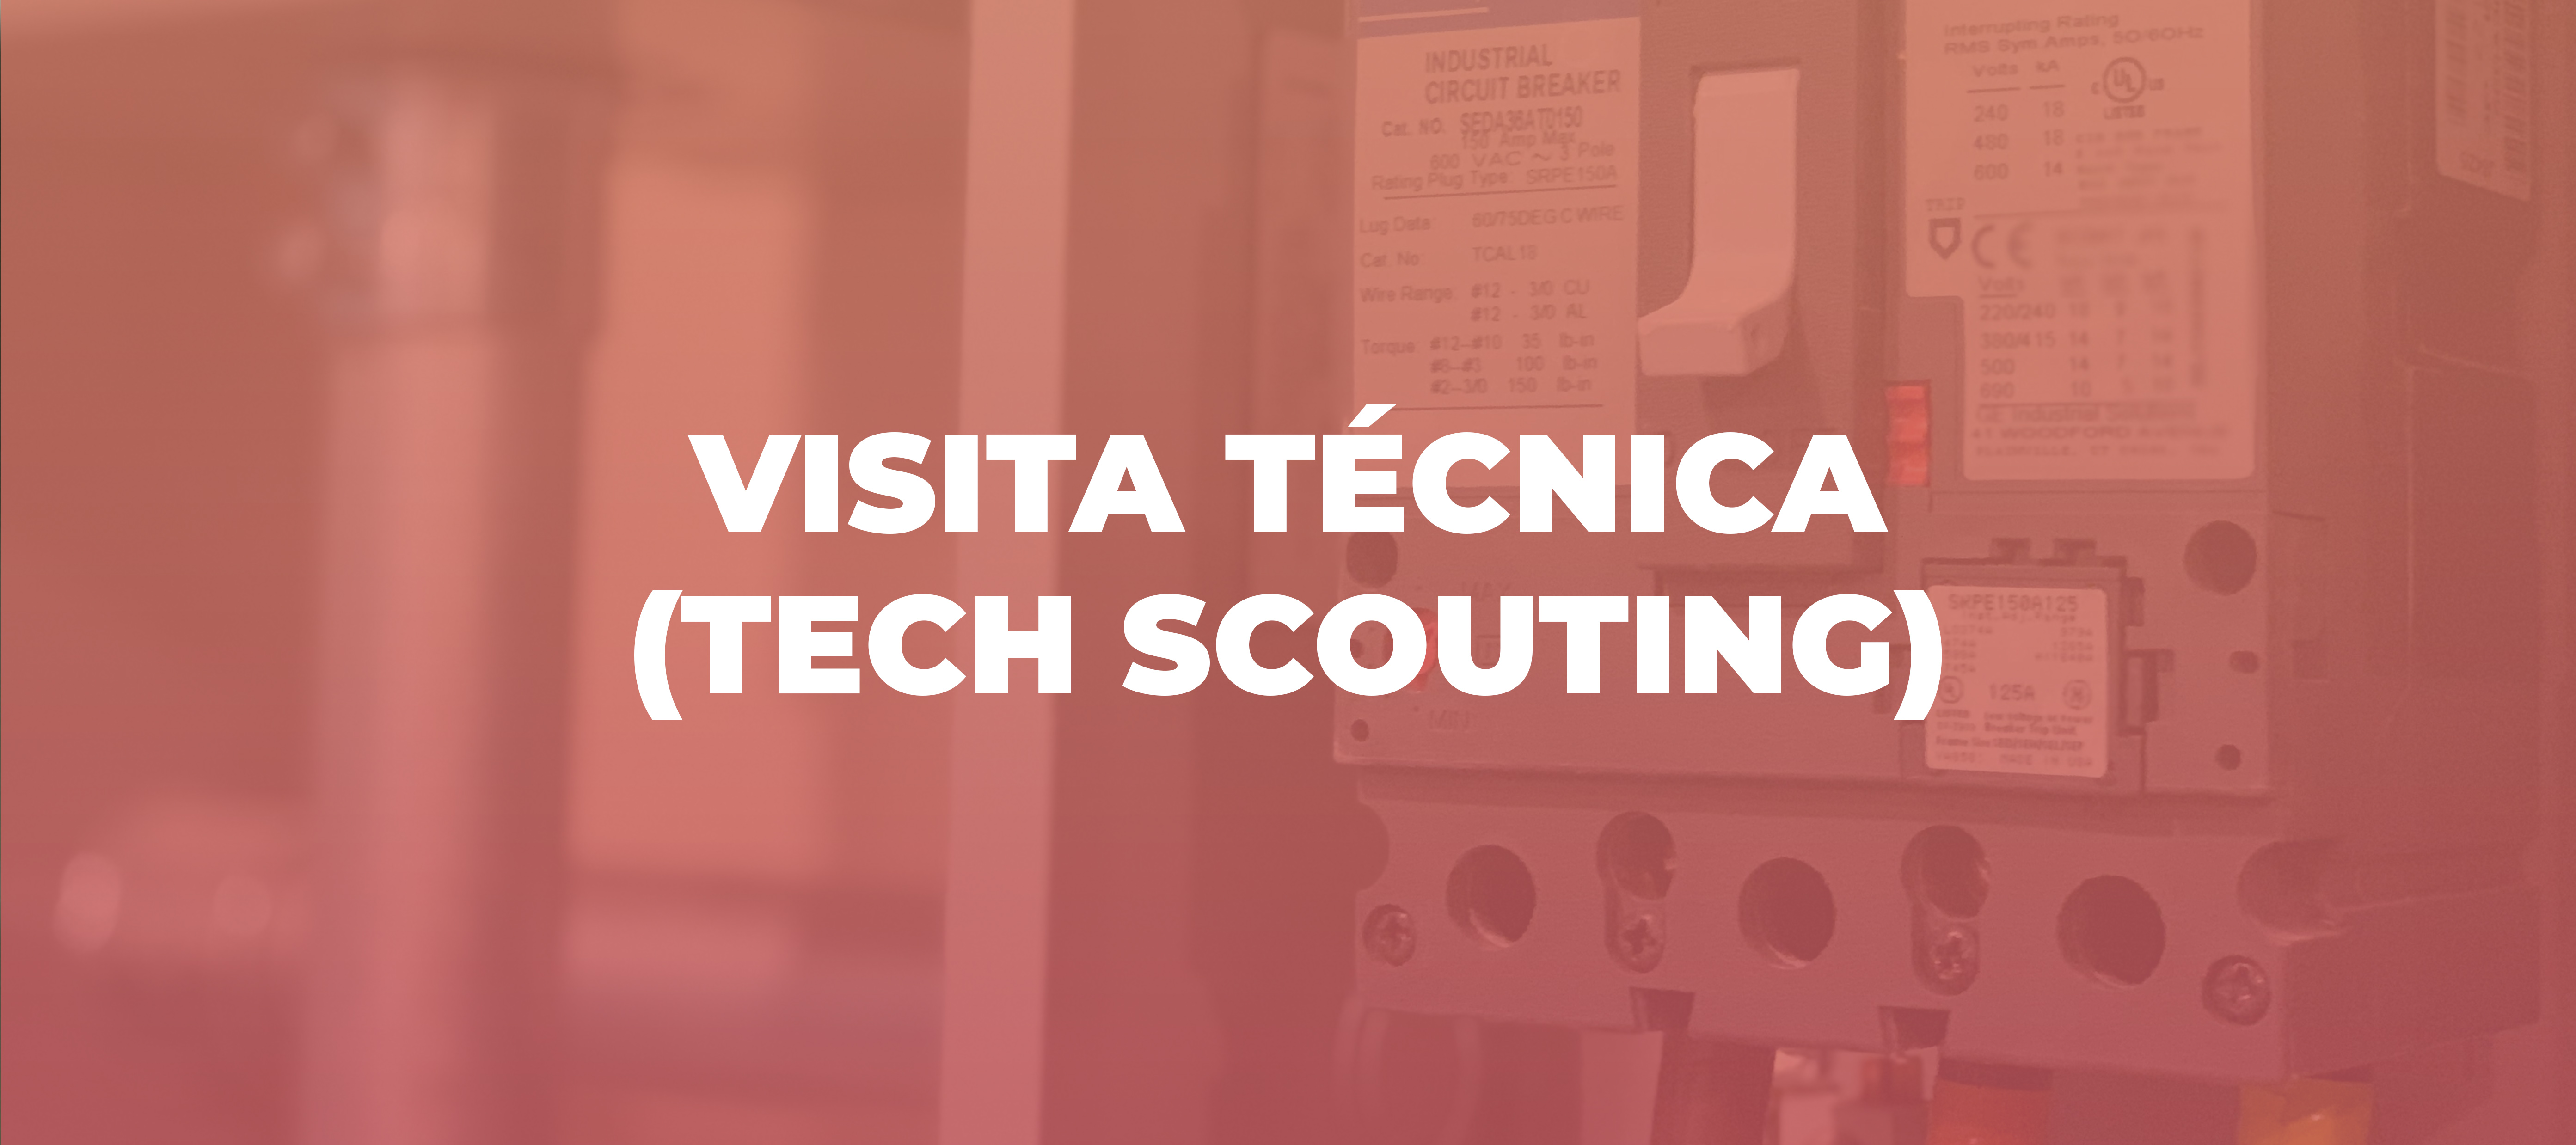 Visita_te_cnica__tech_scouting_.jpg